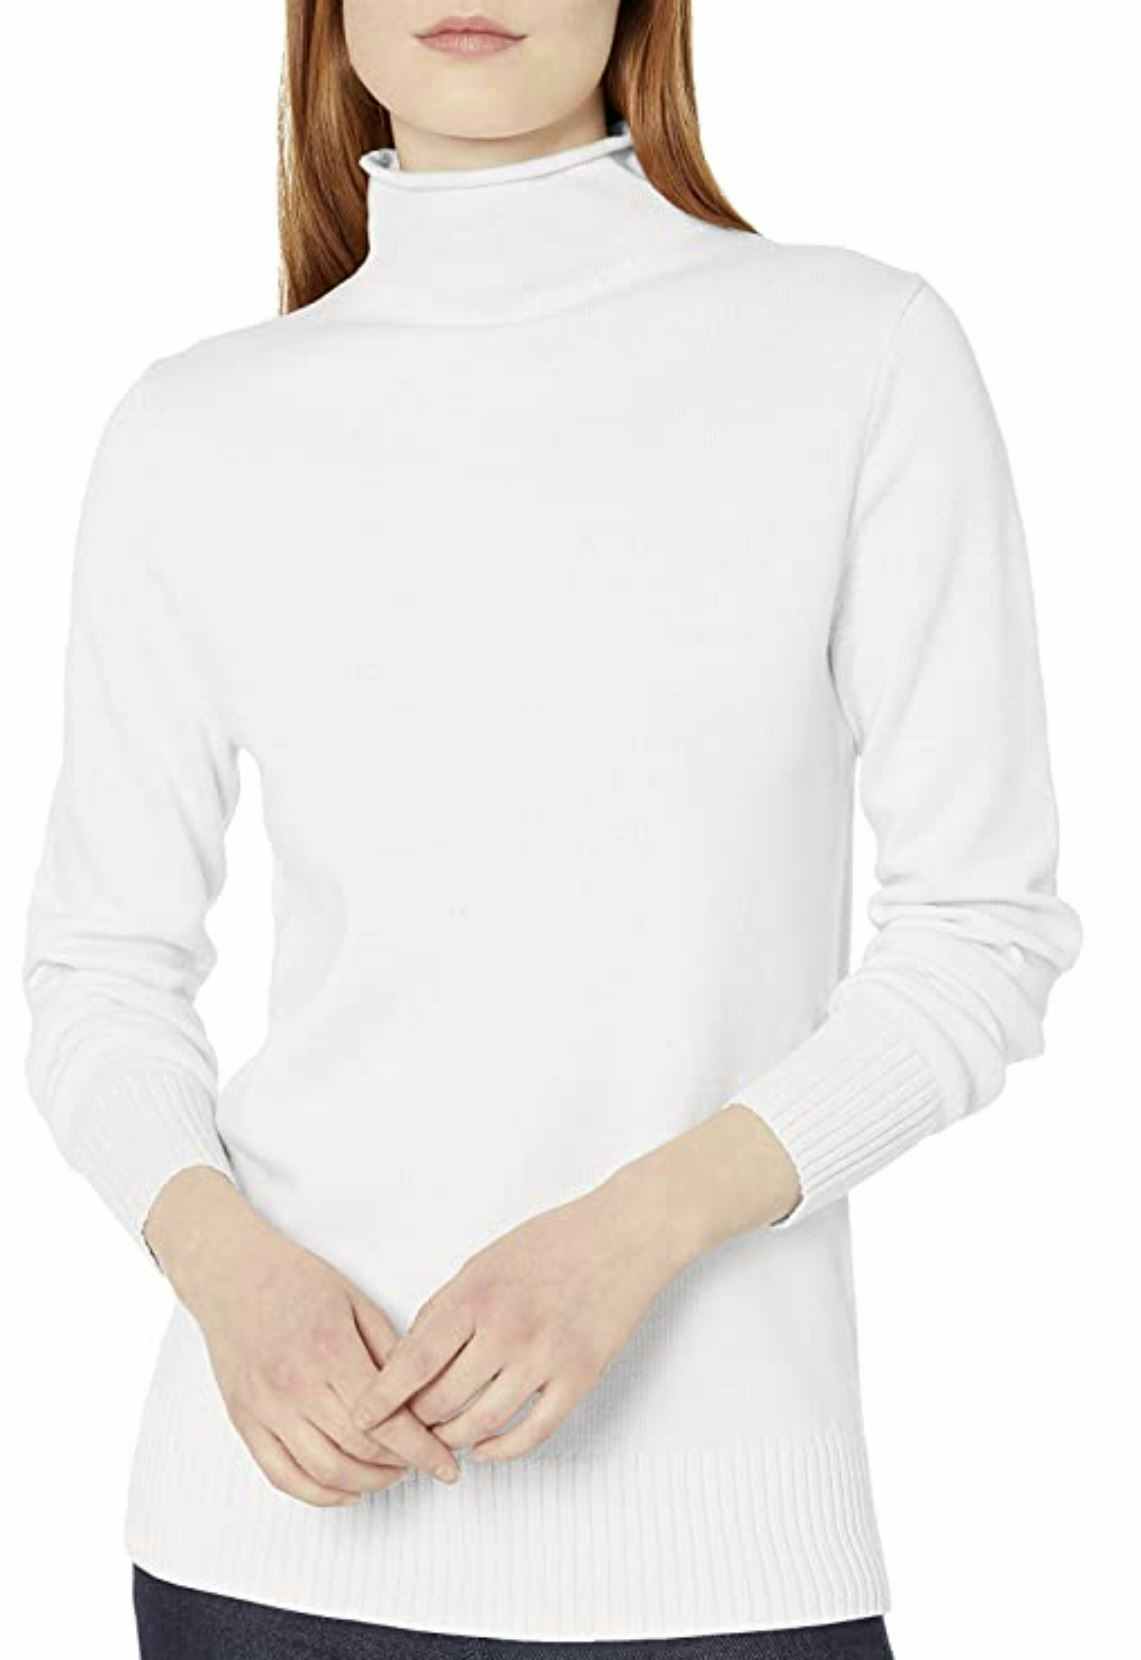 A woman wearing a white turtleneck sweater